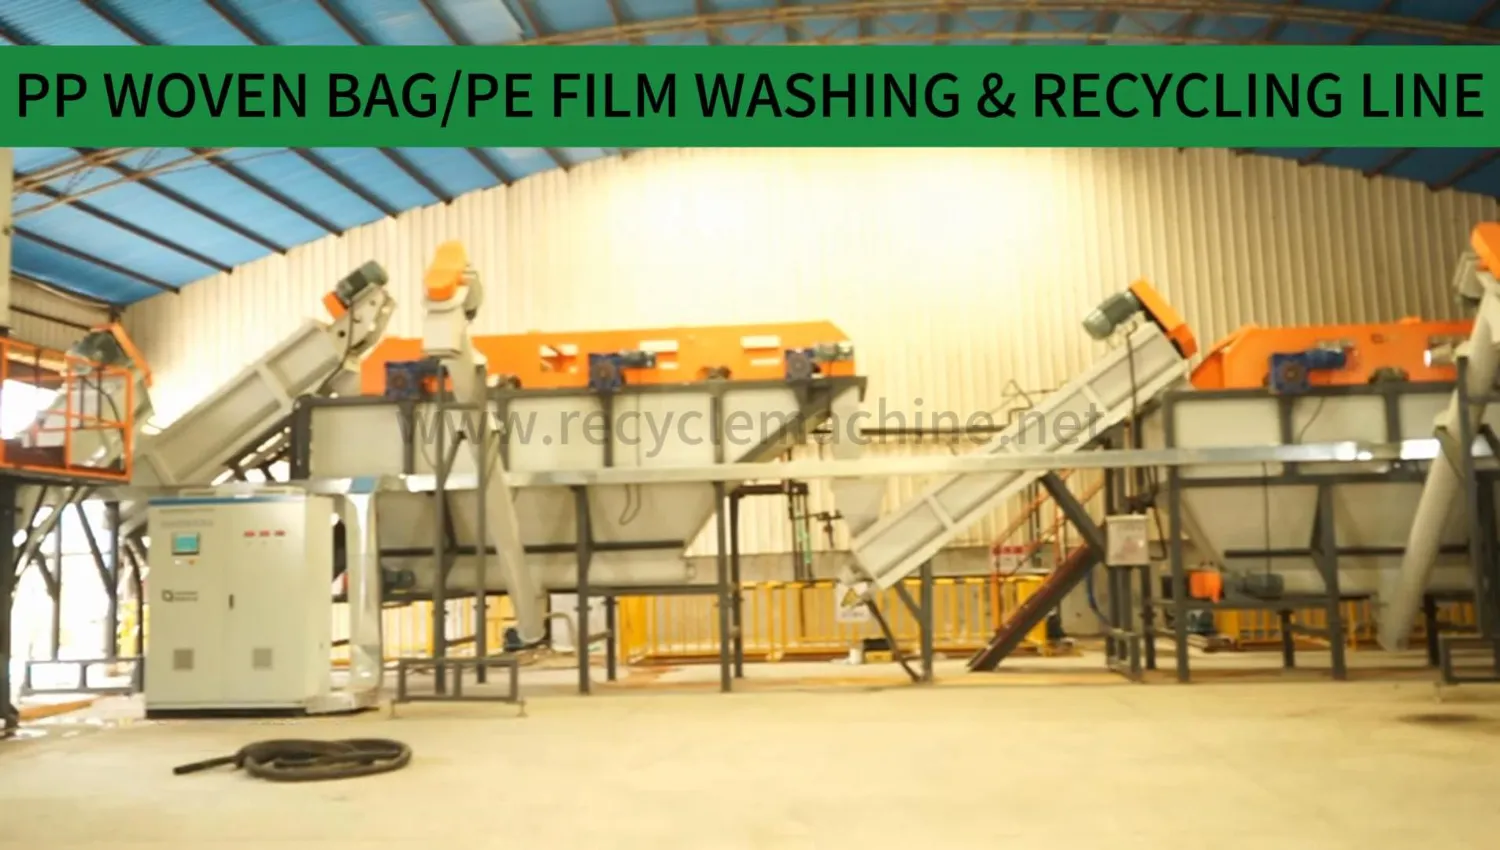 PP Woven Bag/PE Film Washing & Recycling Line – Video